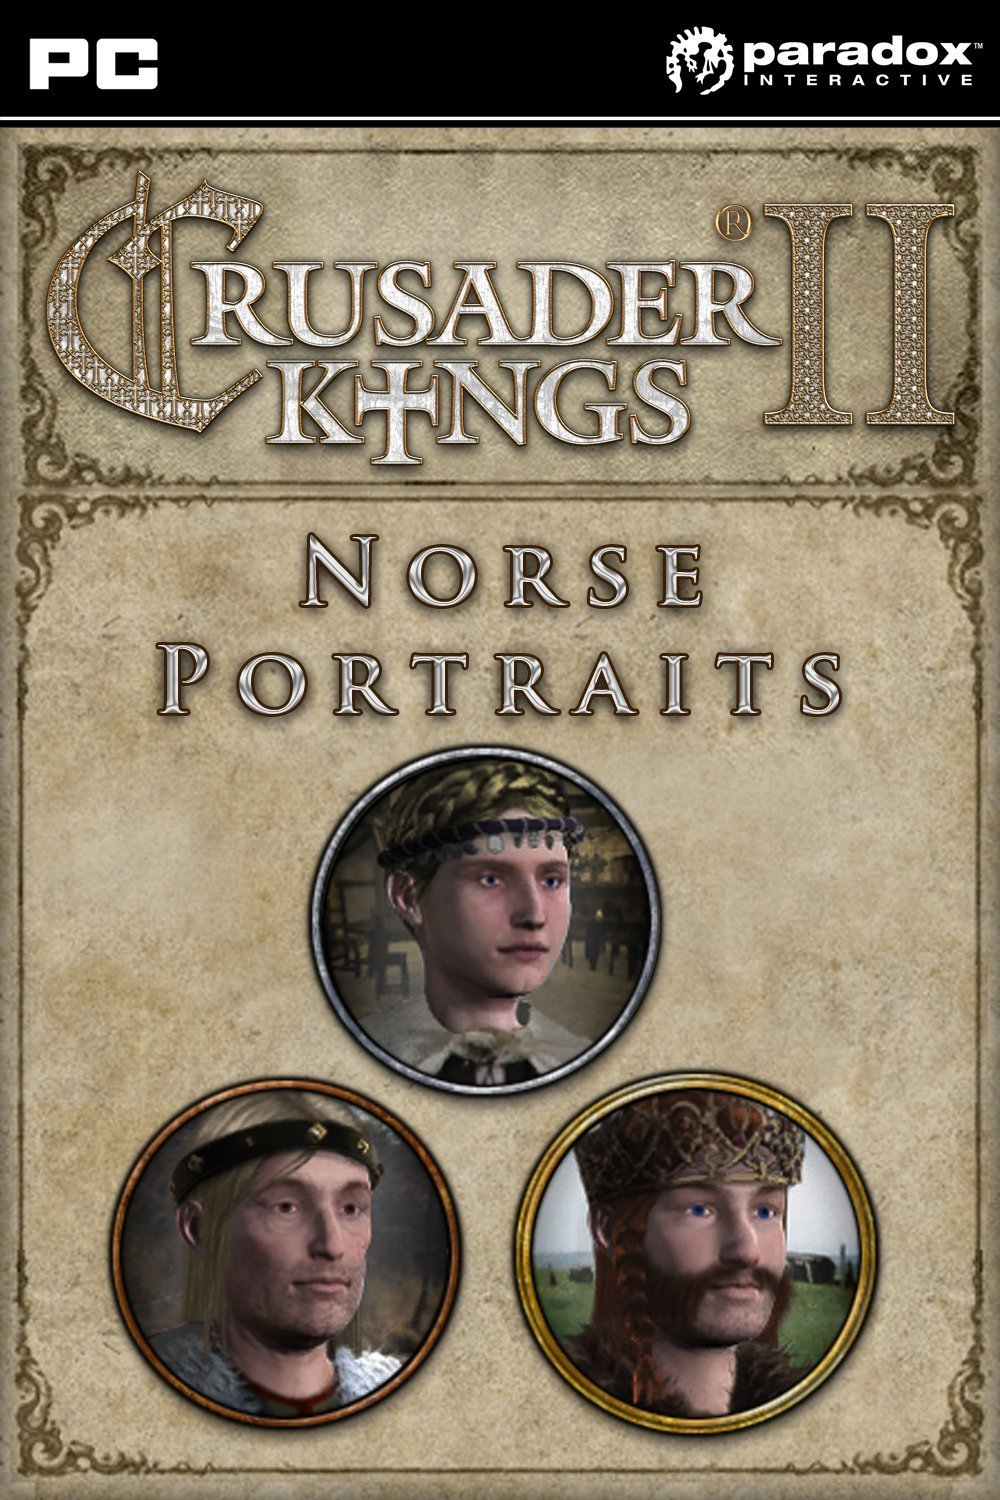 crusader kings 2 portrait mods